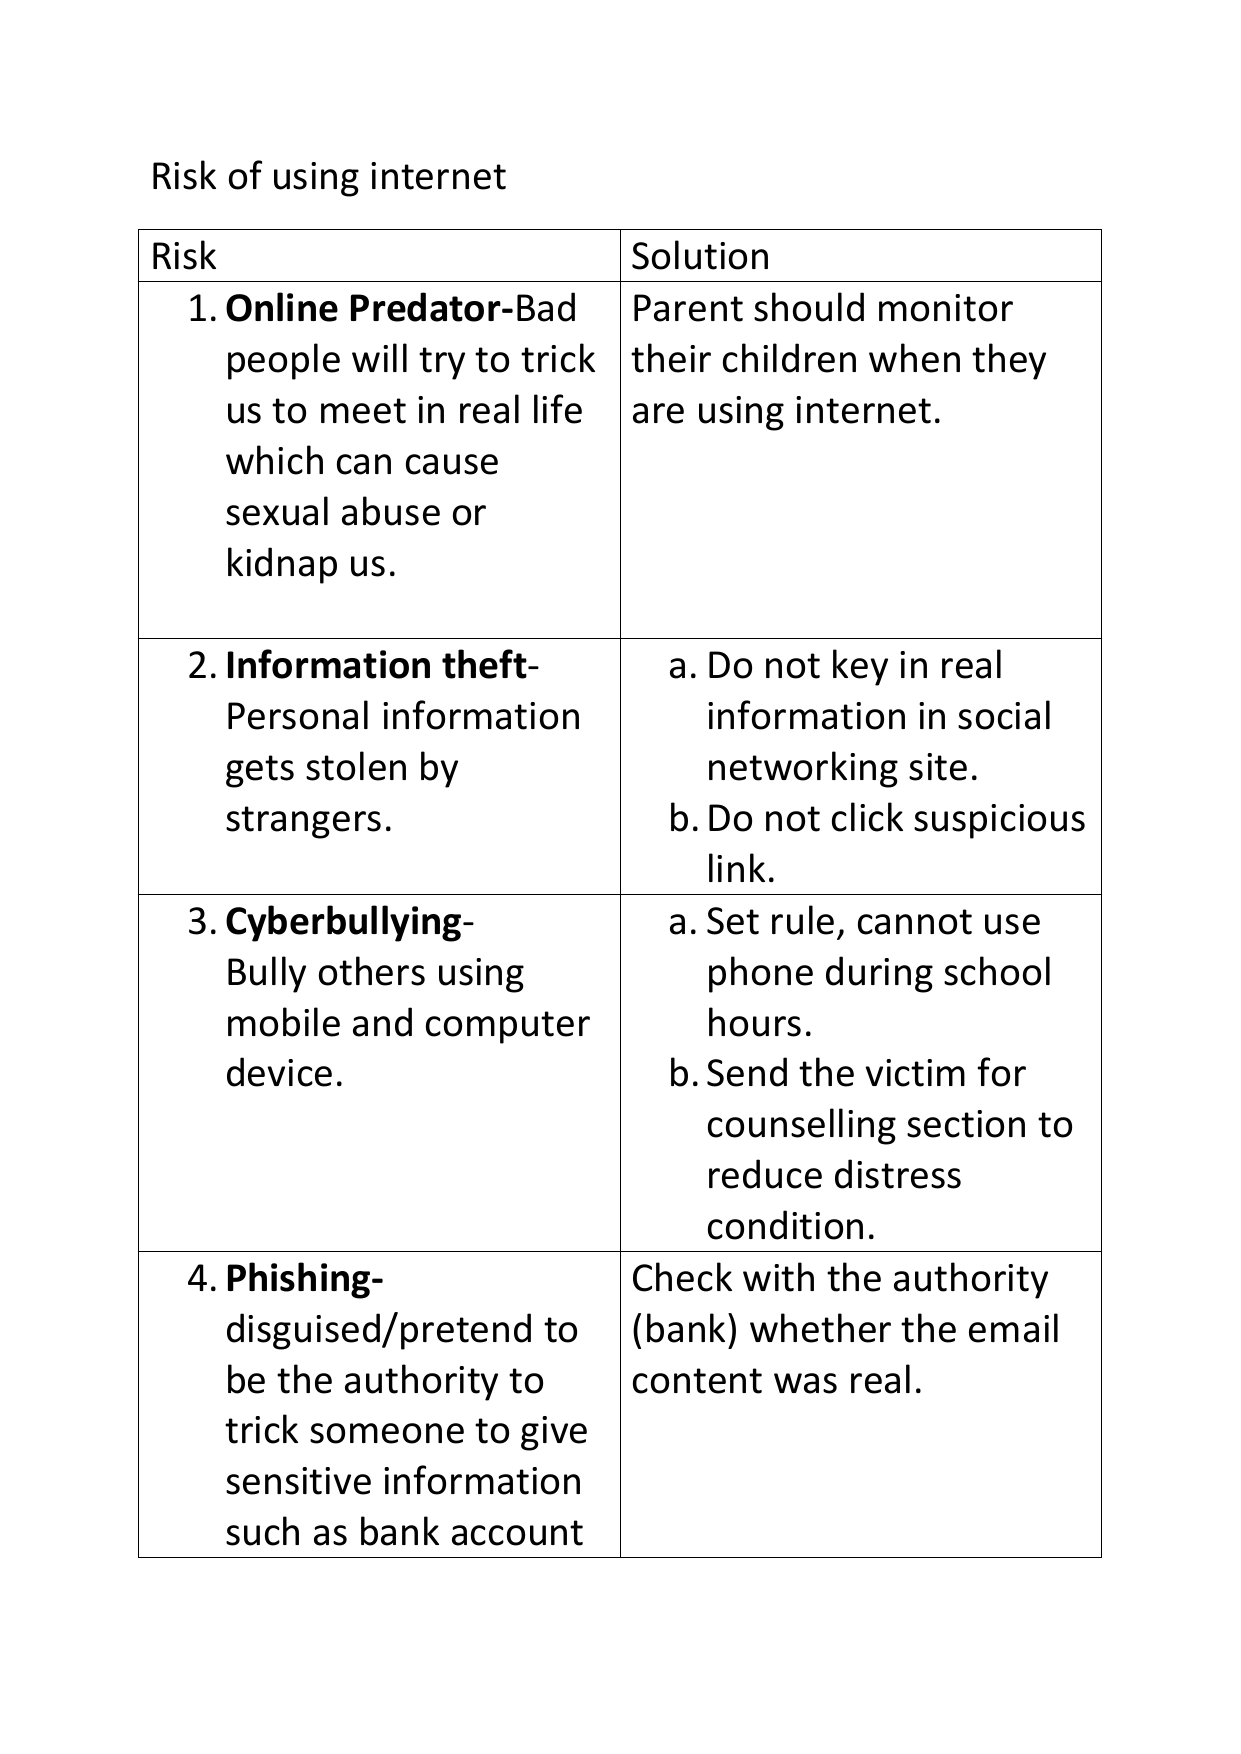 risks of using internet for childrens